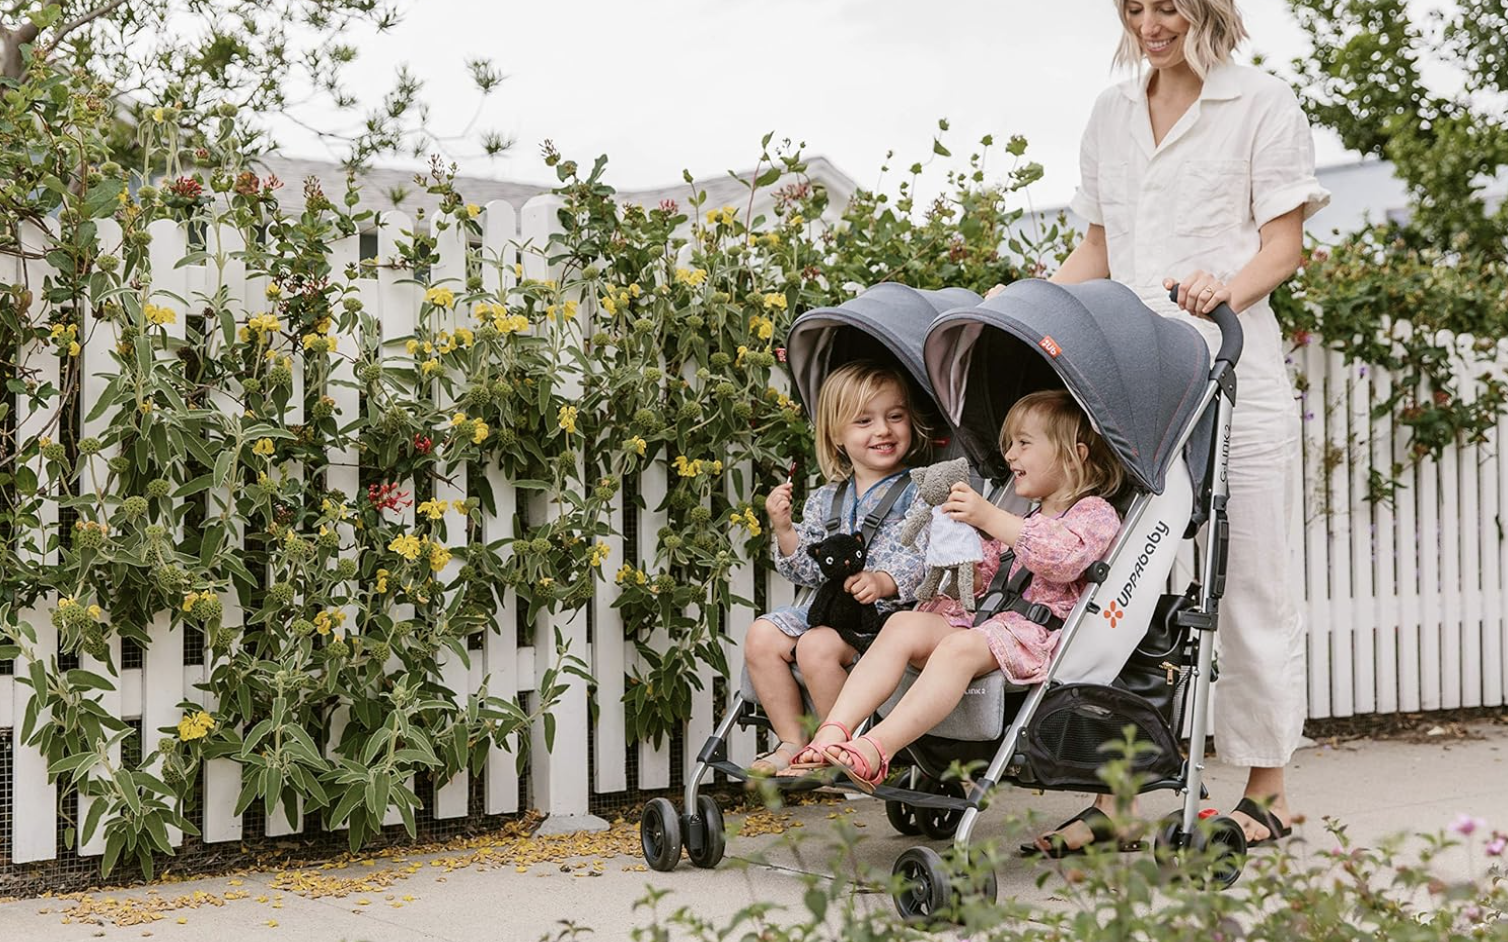 uppababy glink 2 umbrella stroller, Best Double Stroller for Infant and Toddler